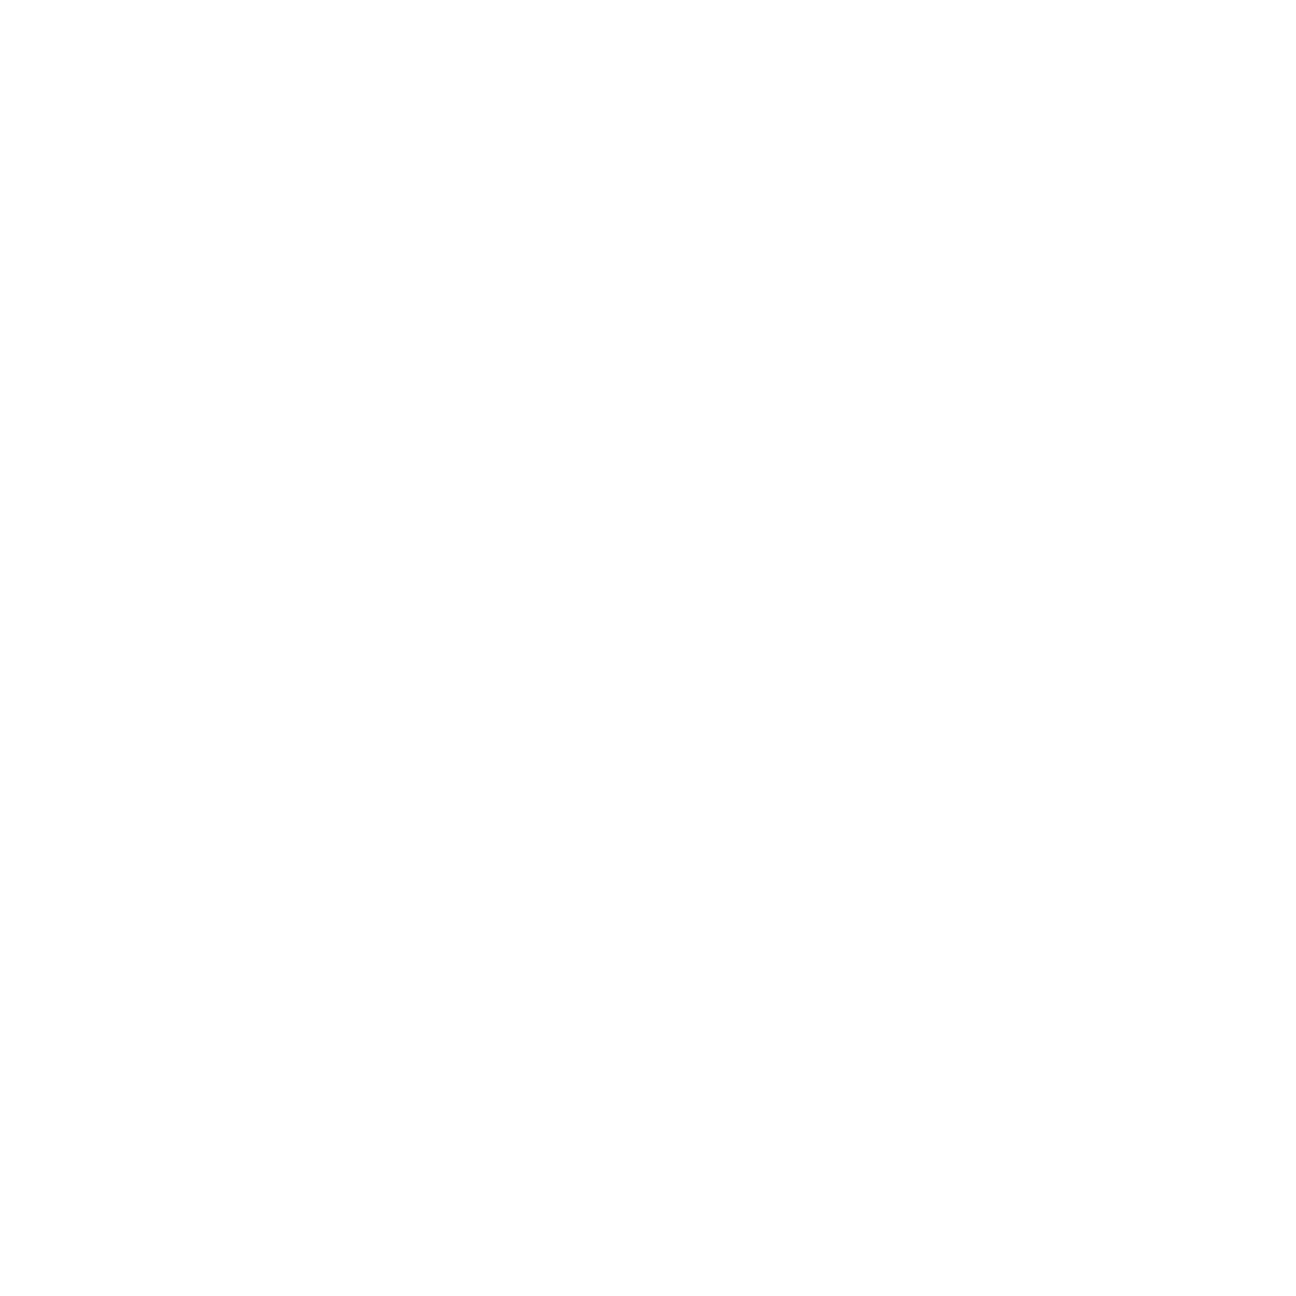 Martinelli Roofing, LLC